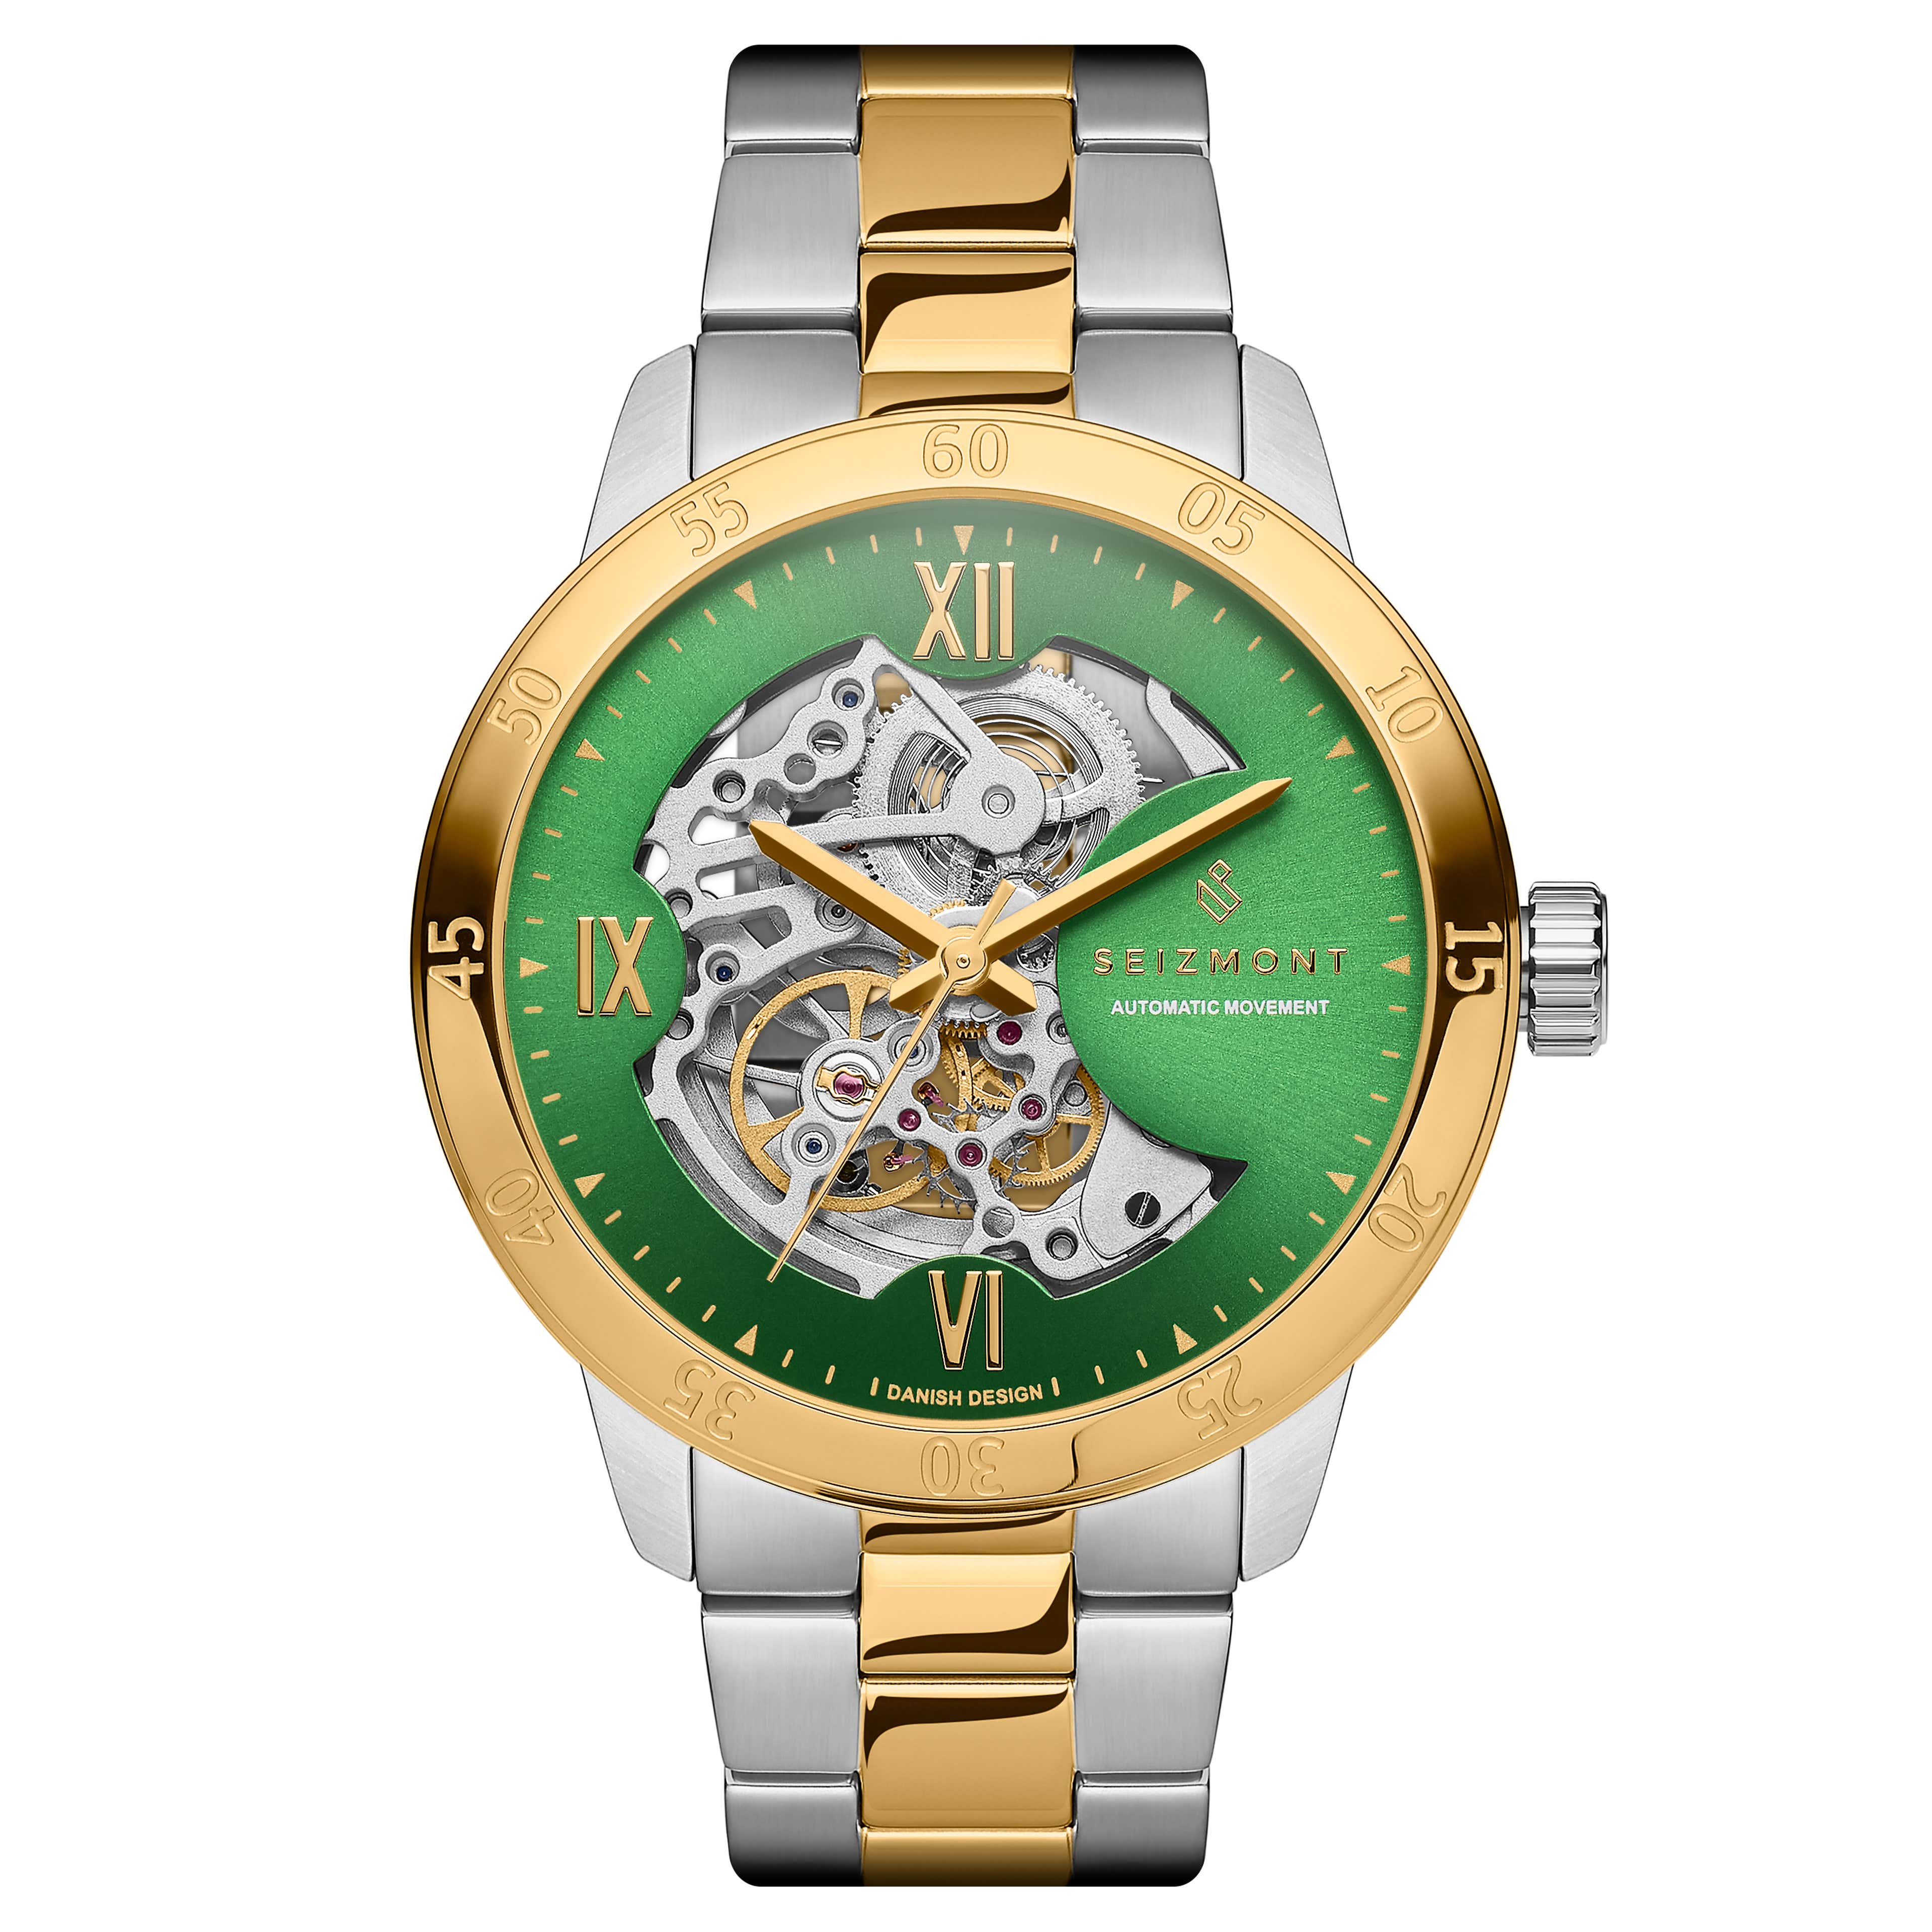 Dante II | Златисто-сребрист часовник с видим механизъм - лимитирана серия